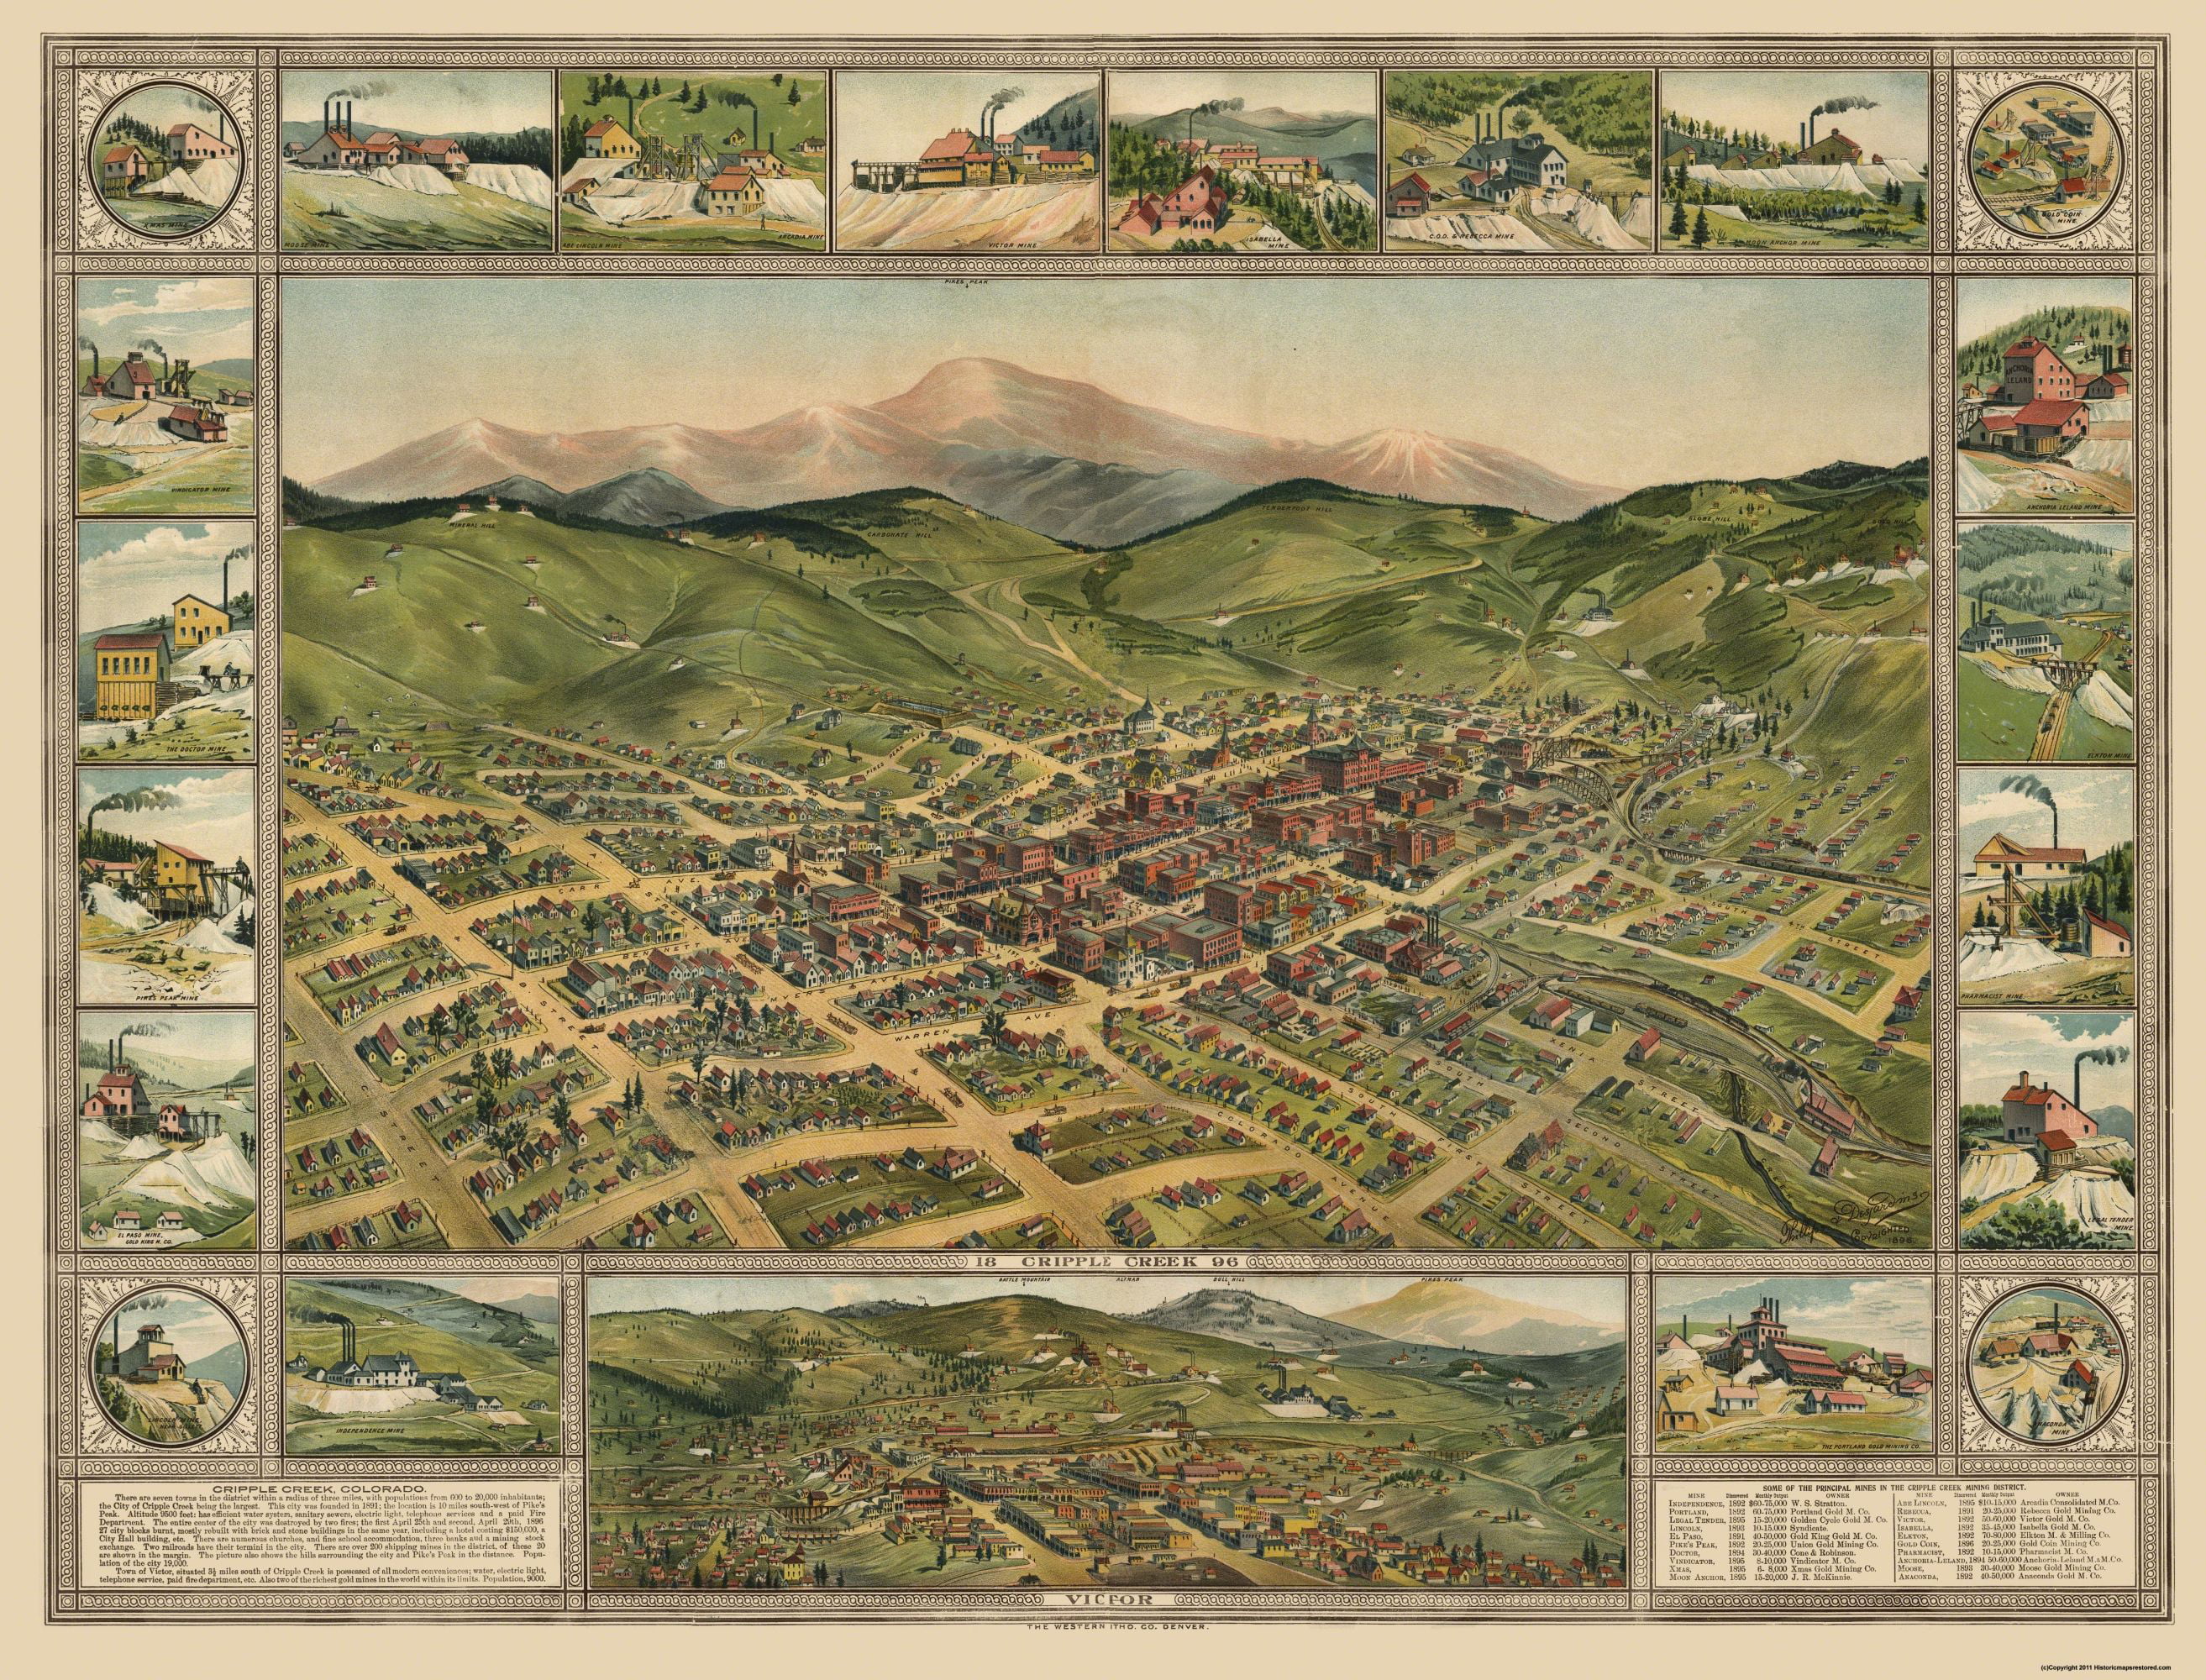 Cripple Creek Colorado 1896-30.19 x 23.